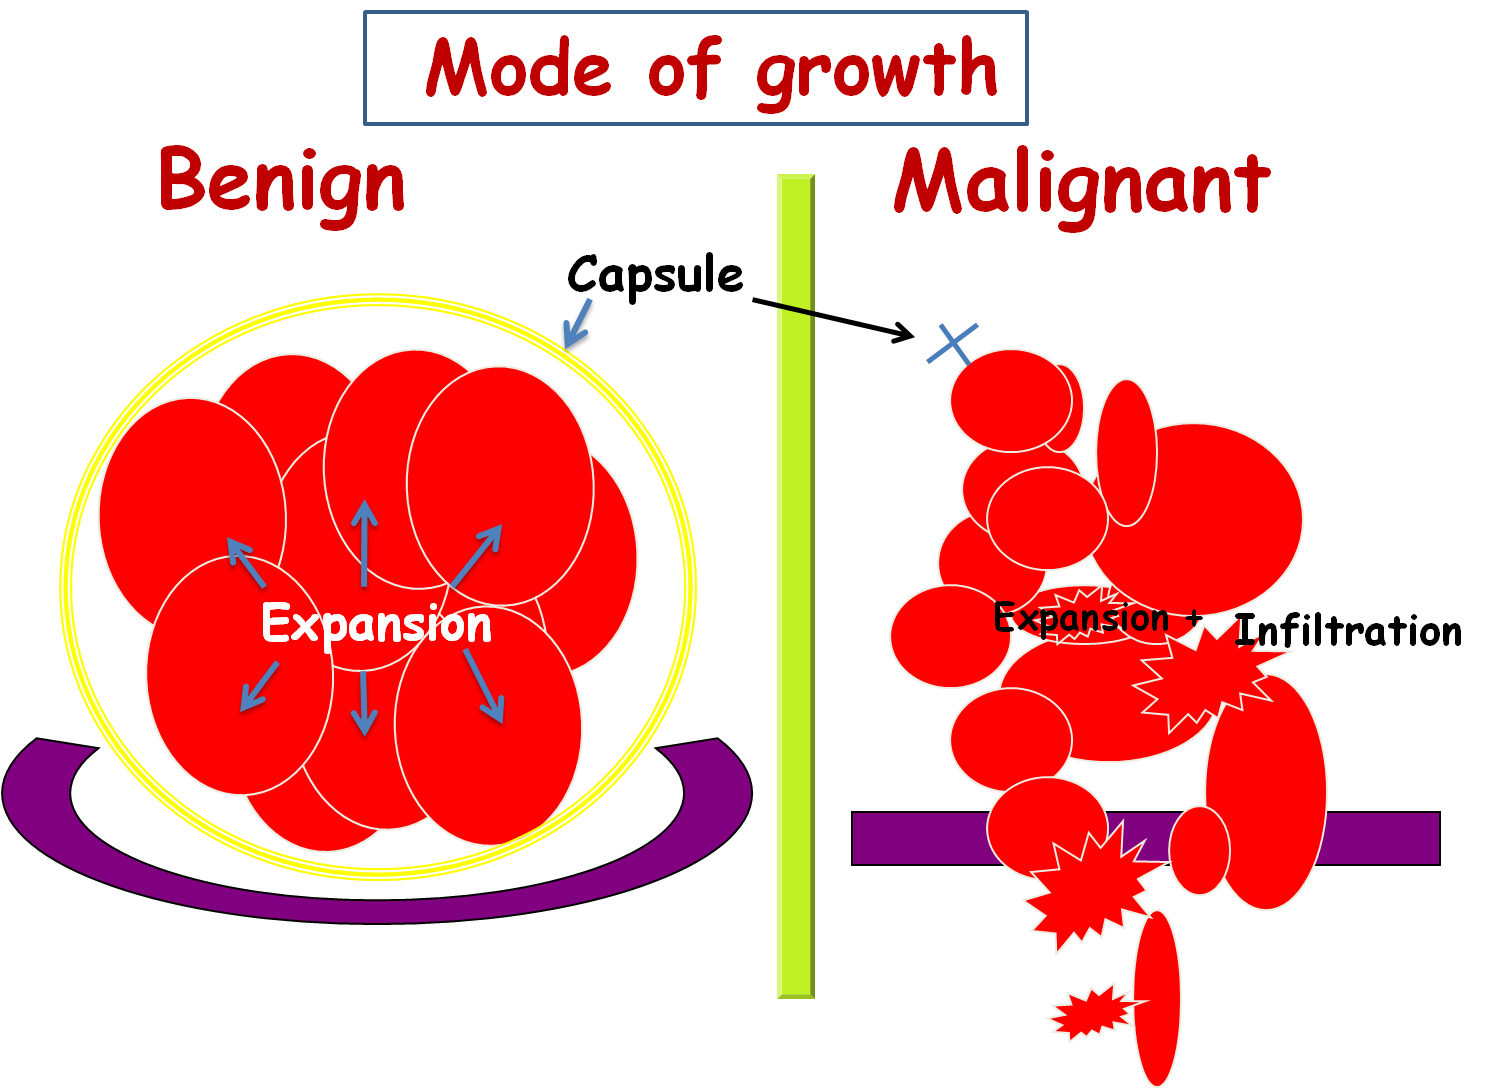 What are malignant tumors?